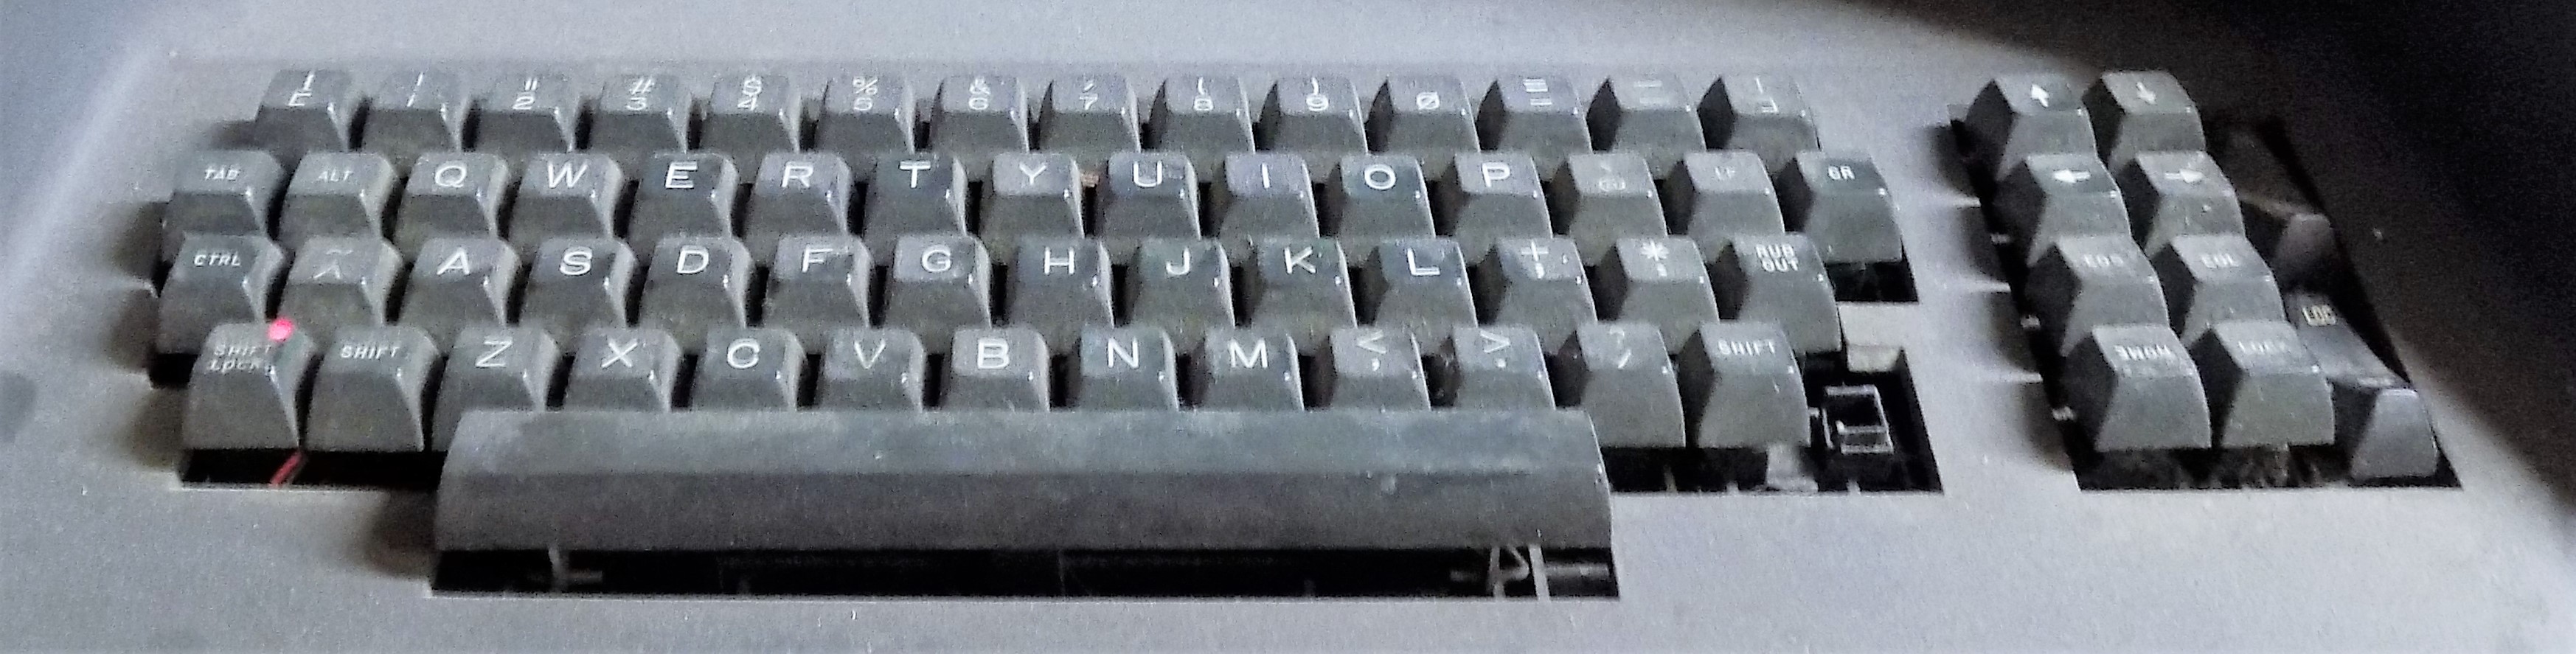 DEC HiTek Keyboard